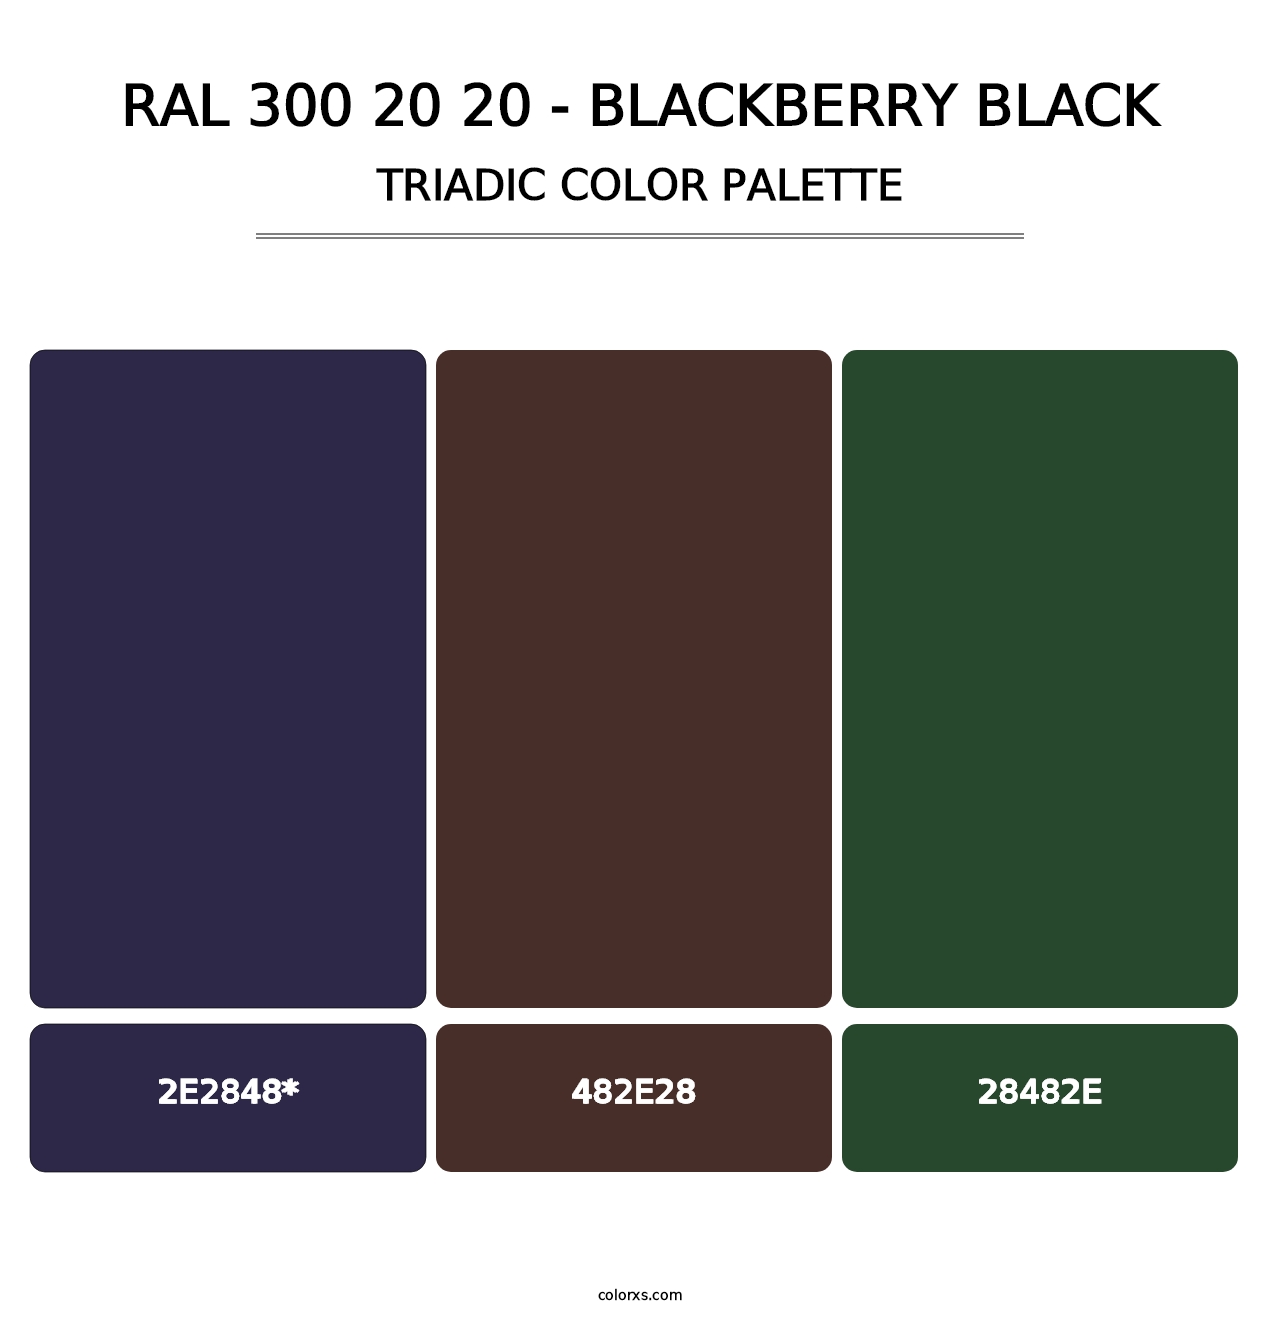 RAL 300 20 20 - Blackberry Black - Triadic Color Palette